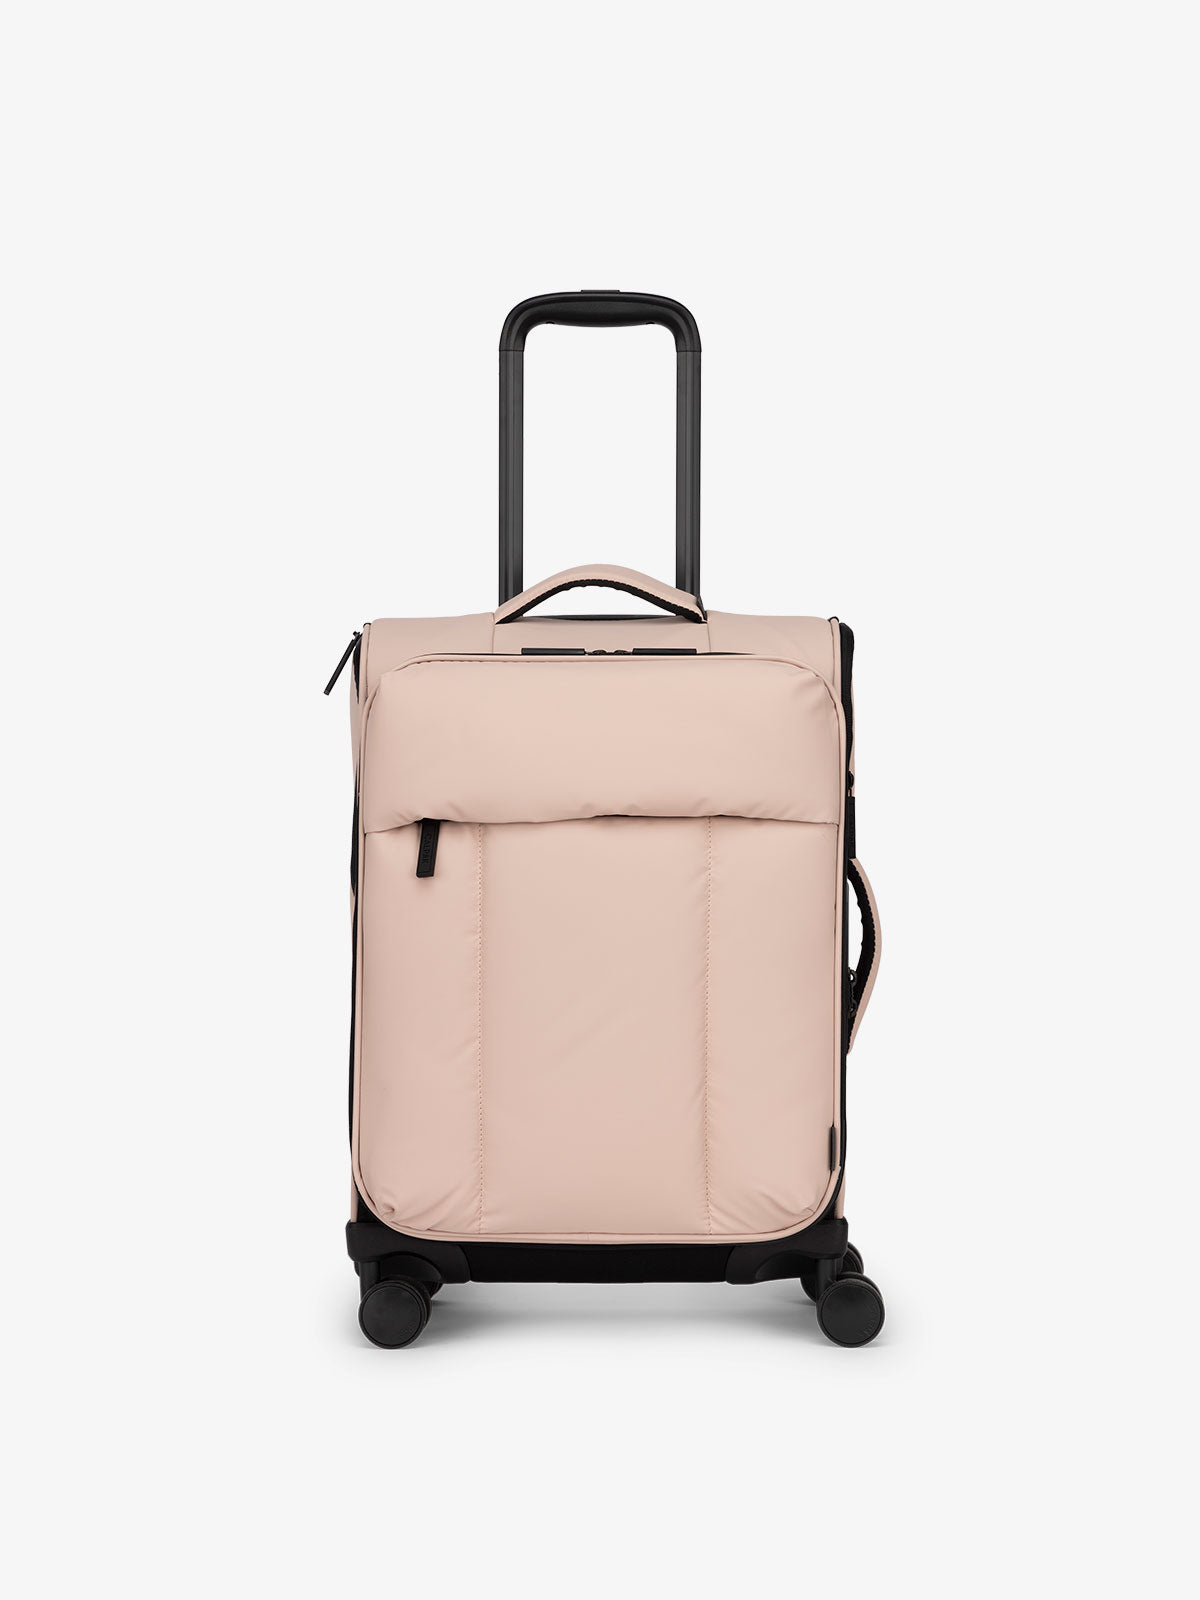 CALPAK Luka soft sided carry on luggage in rose quartz